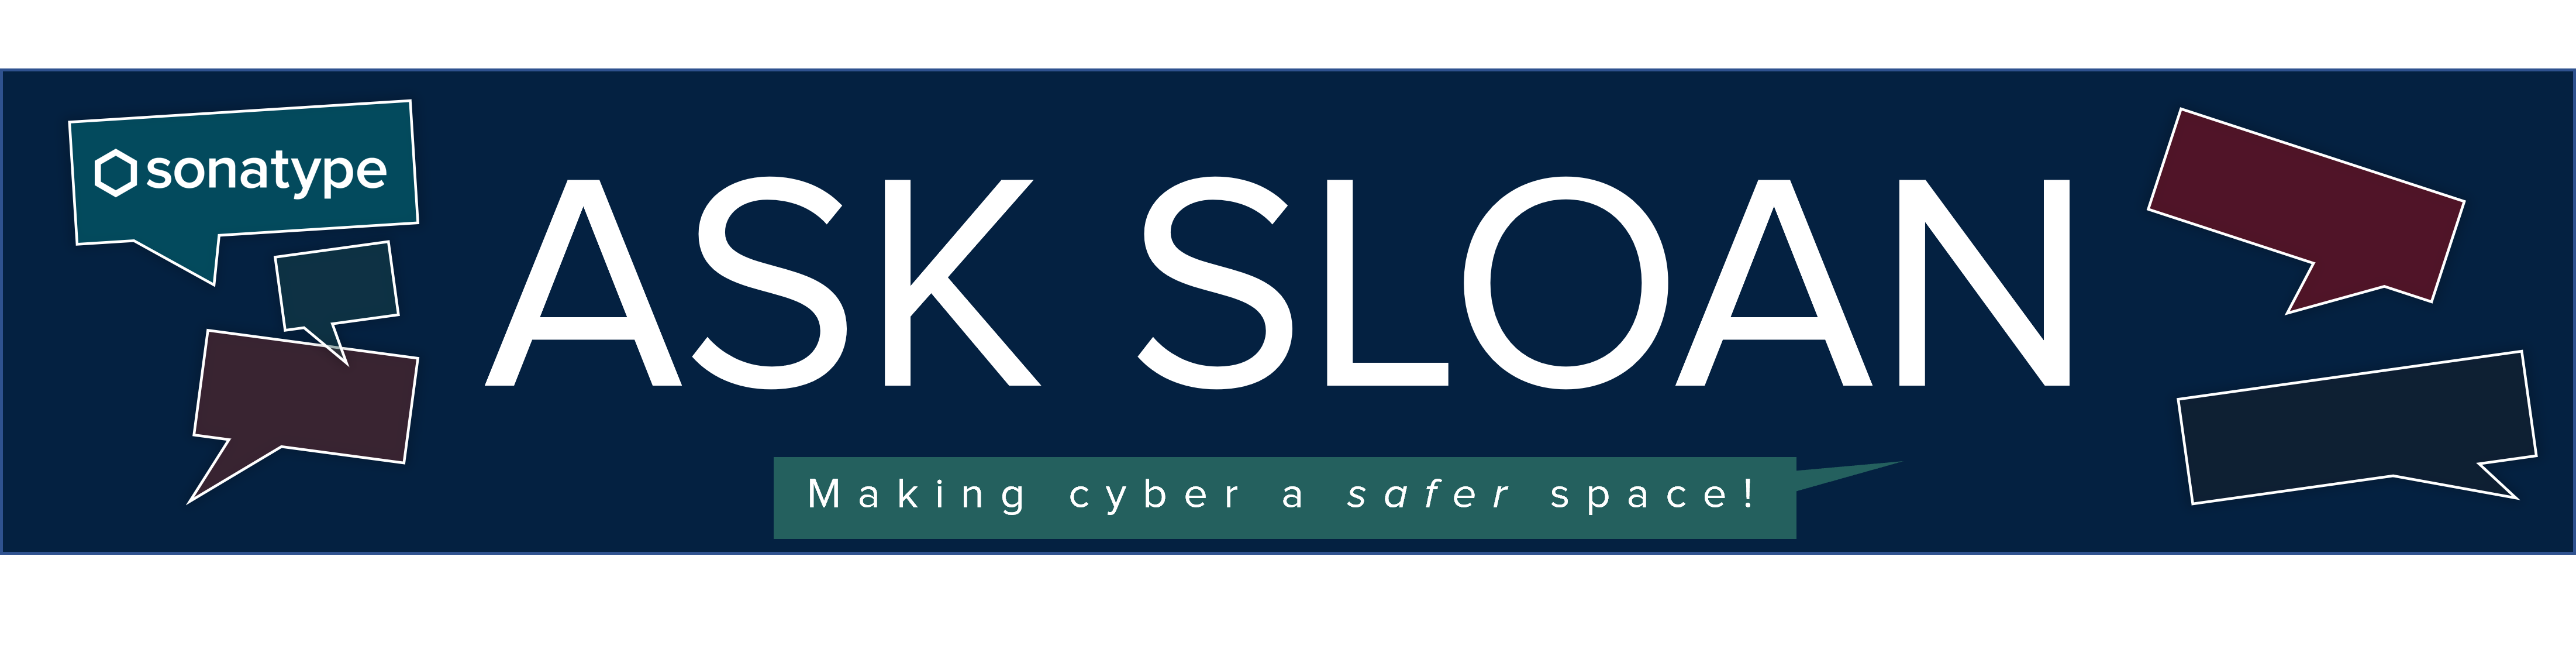 Ask Sloan logo